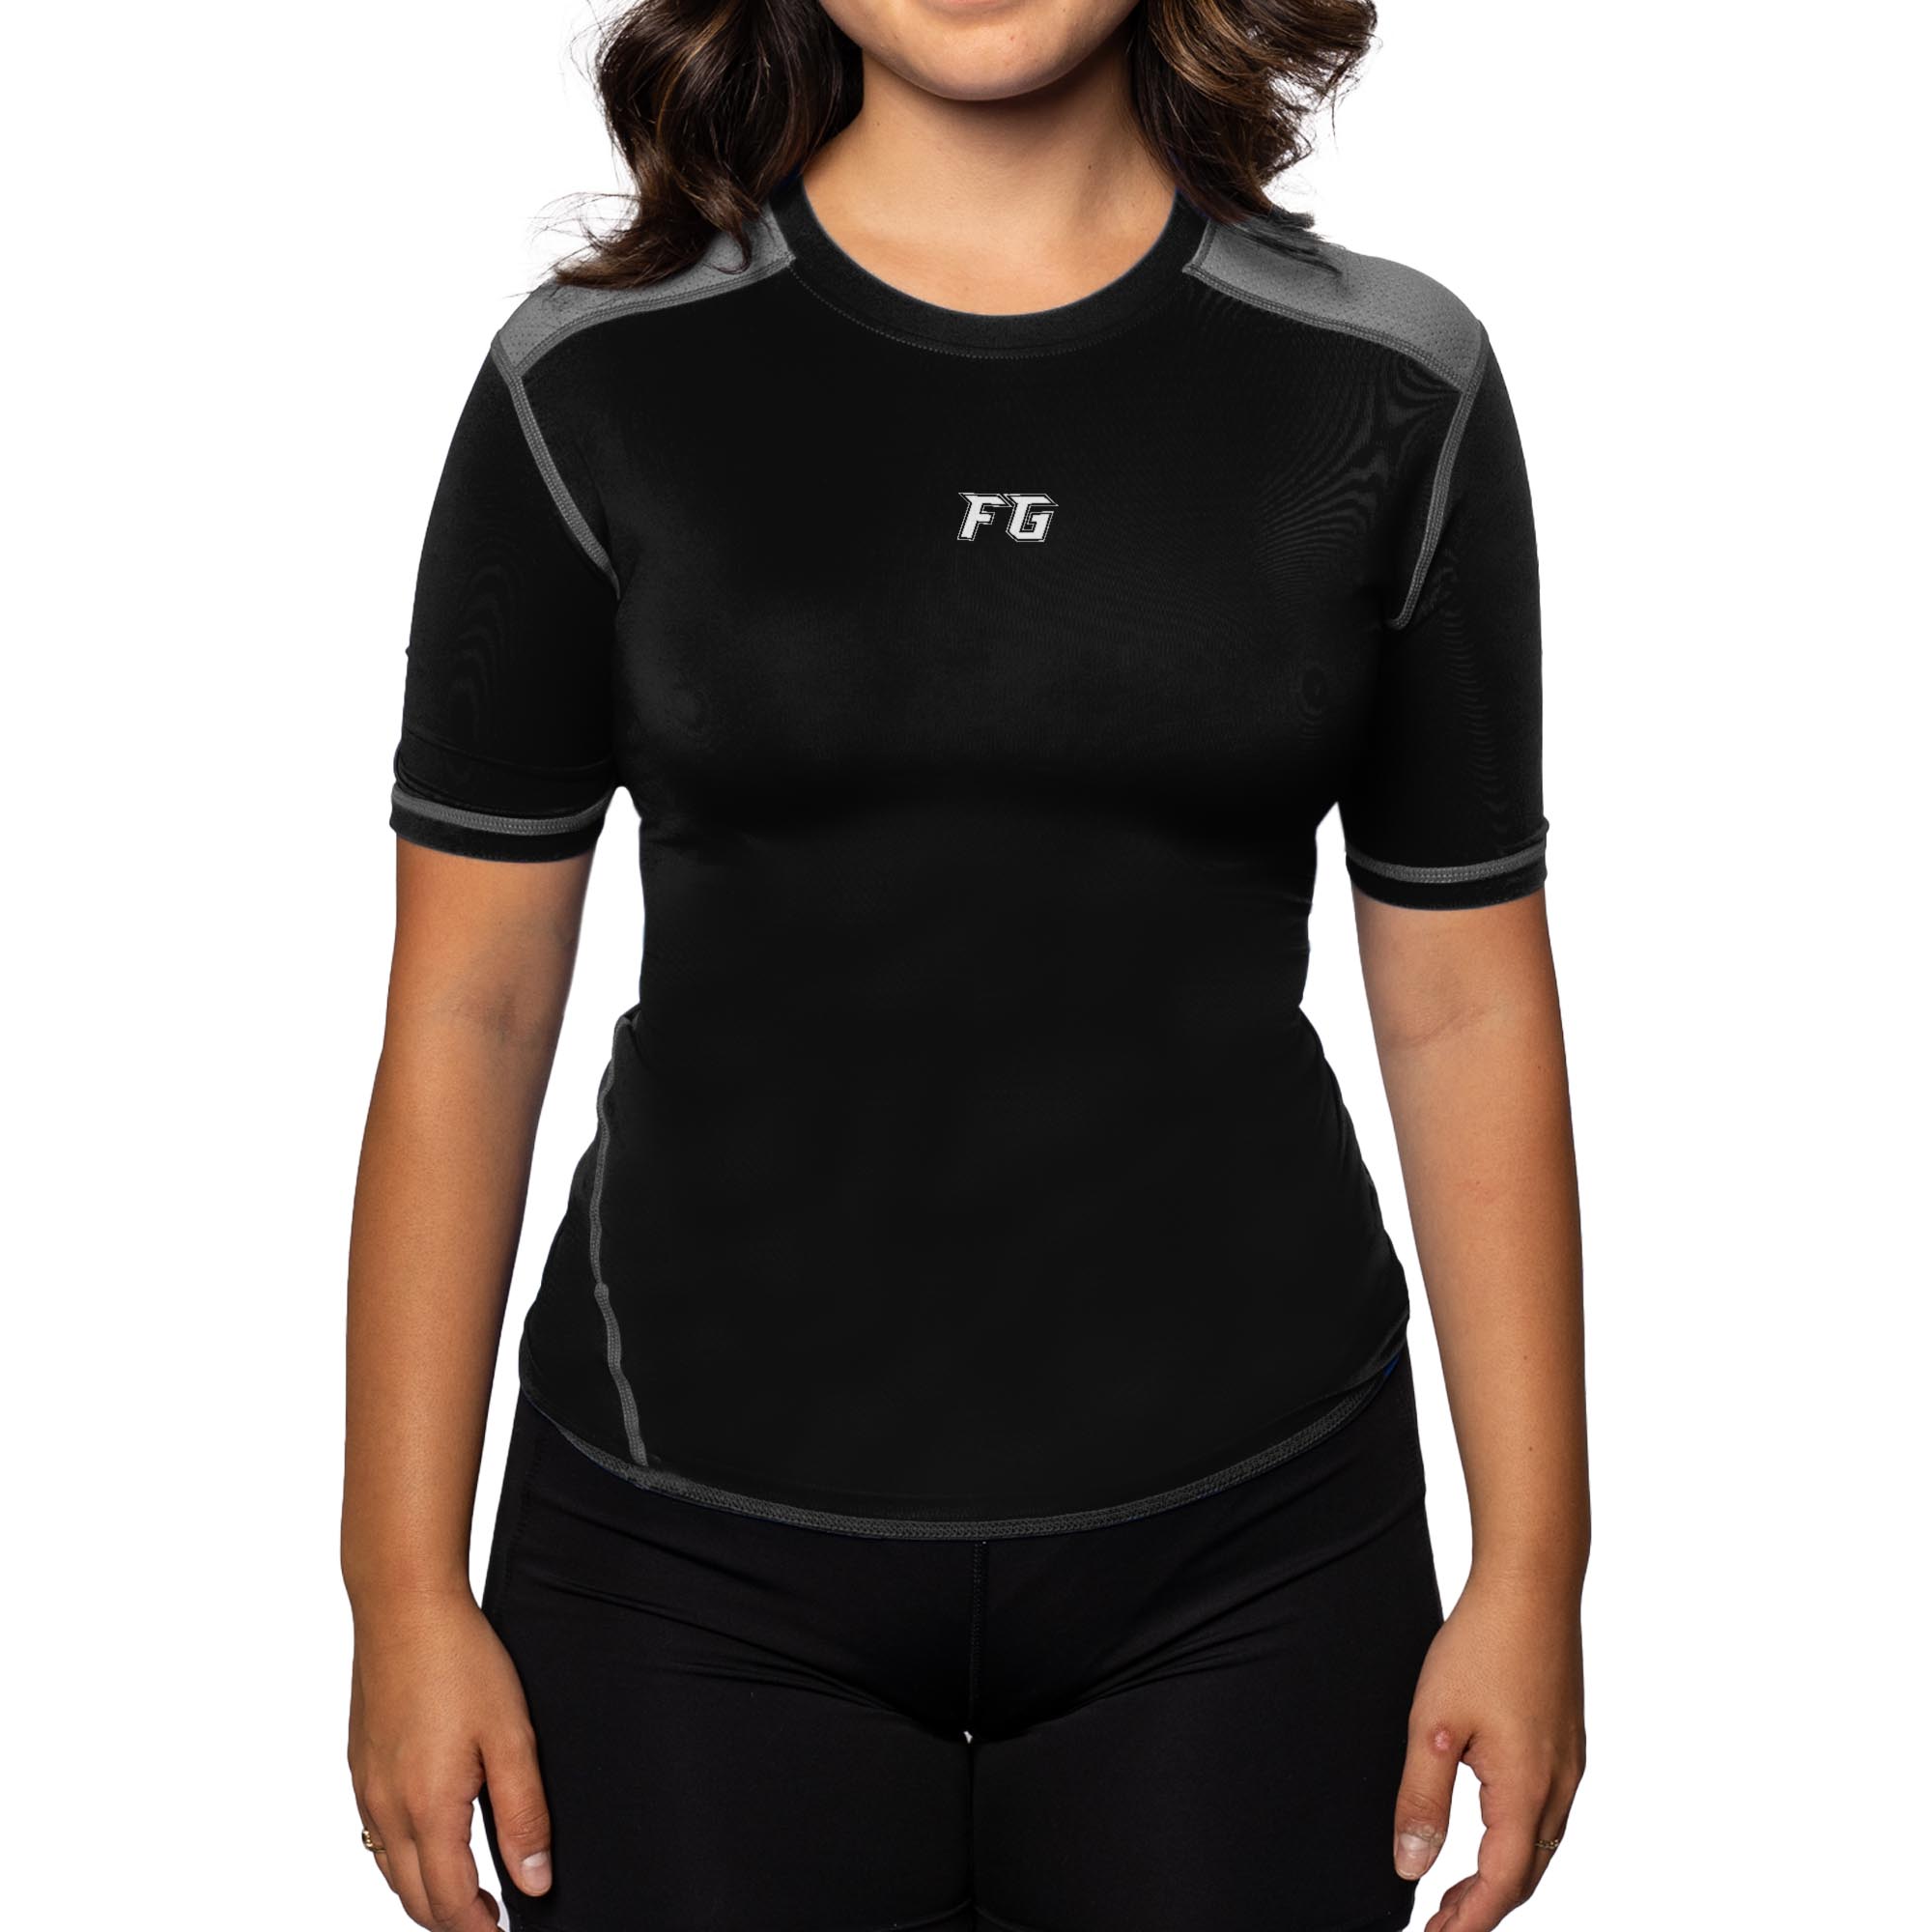 SPORX Women's Compression Shirt Black